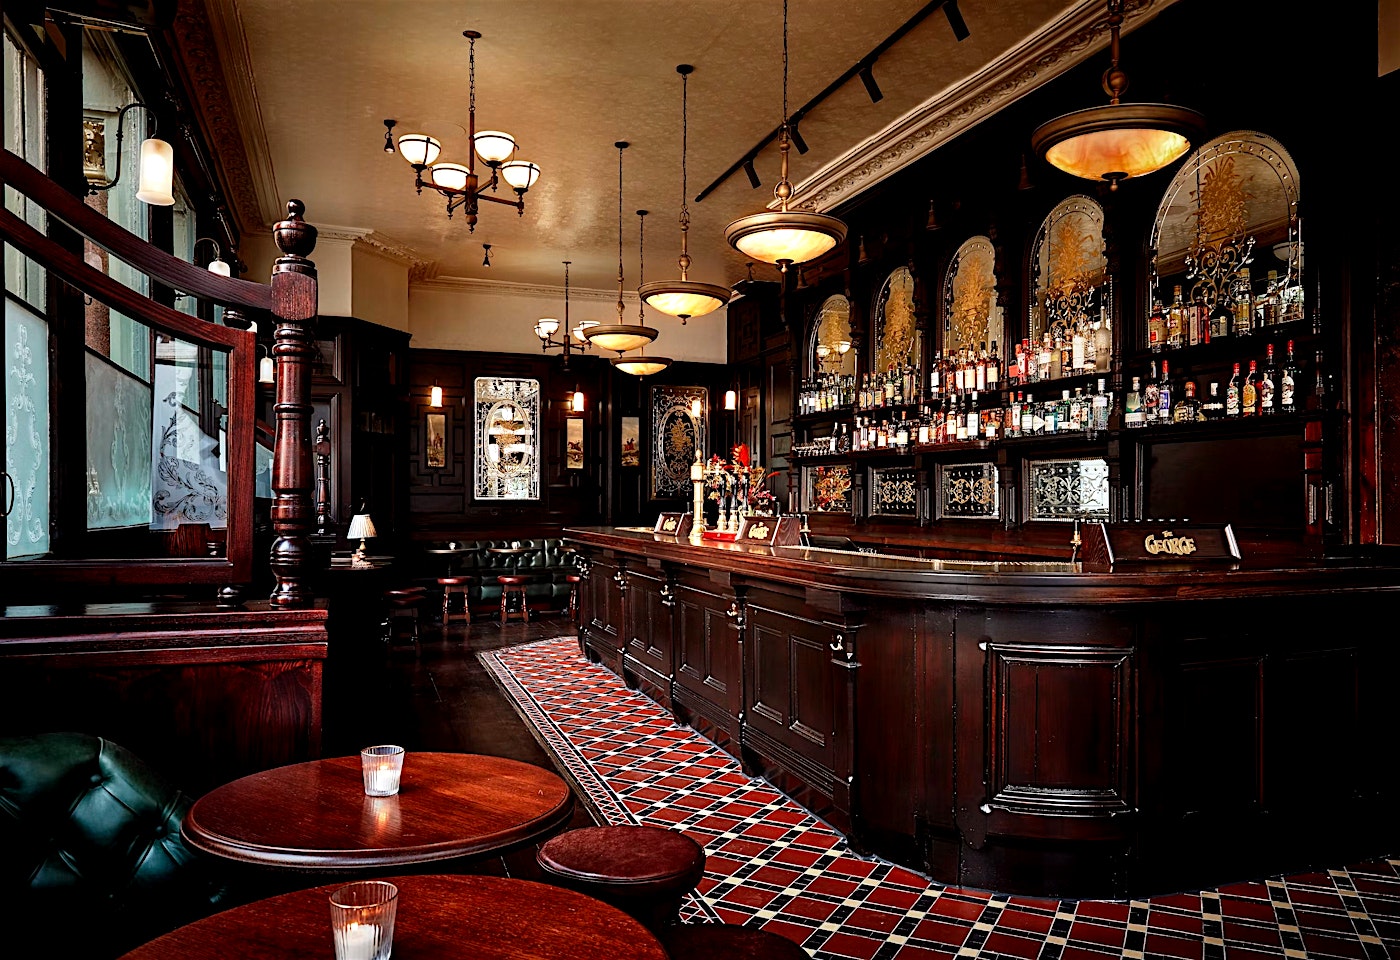 The george london pub